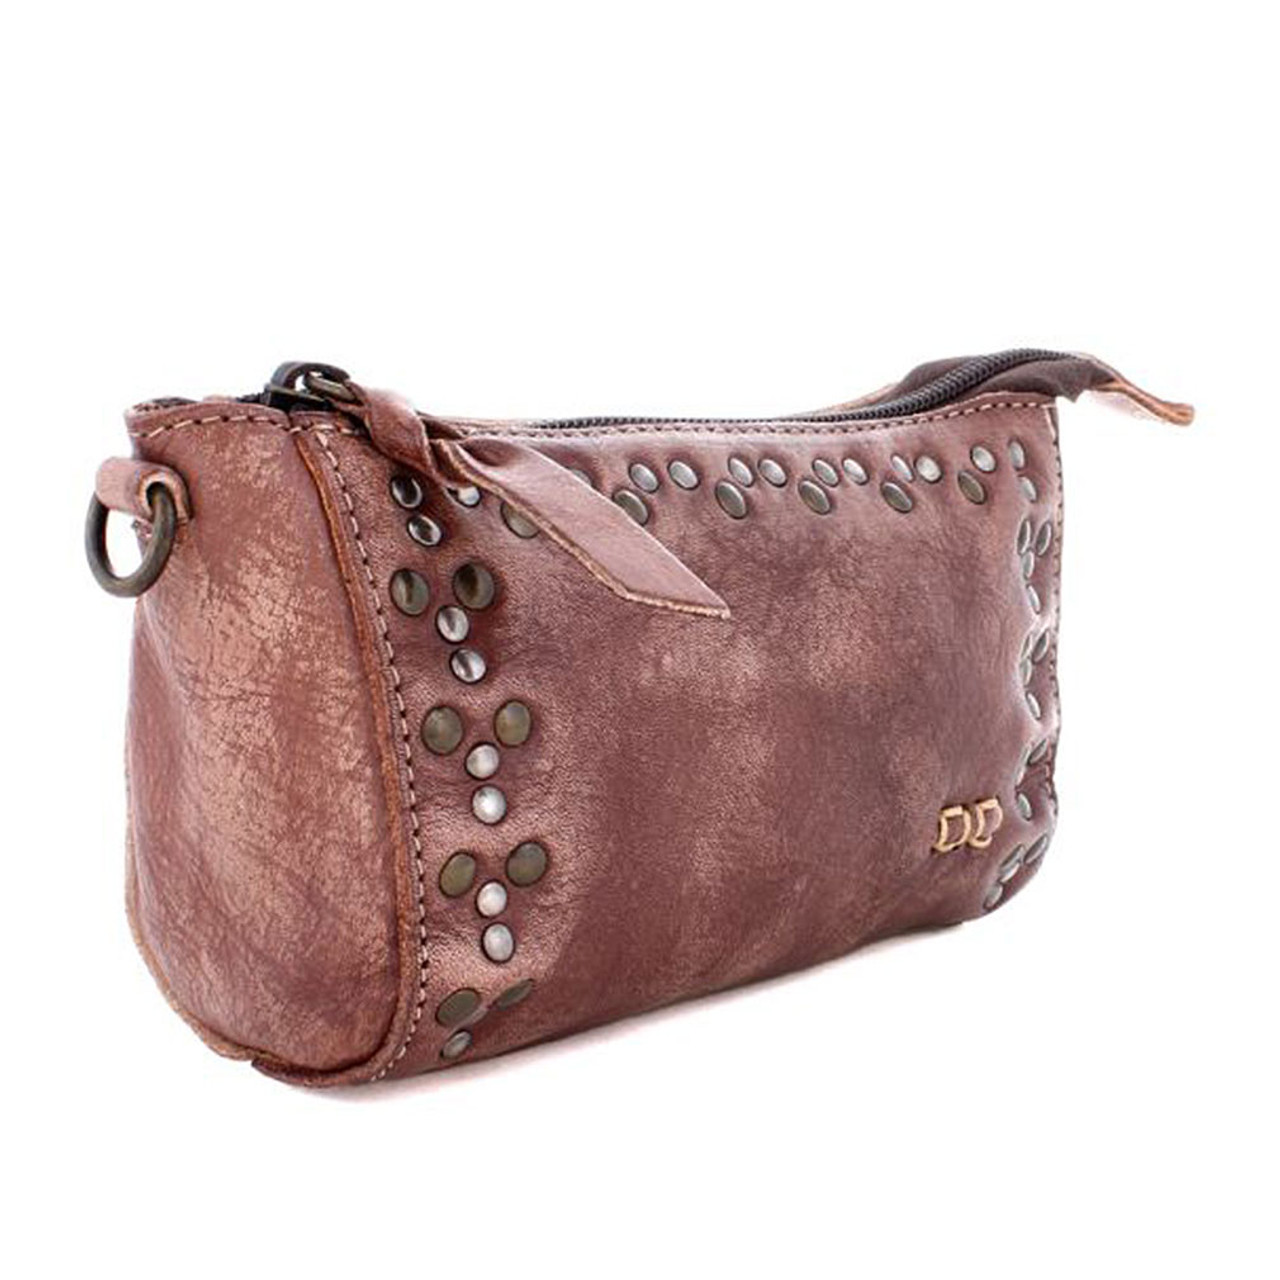 NIUCUNZH Genuine Leather Mens Clutch Bag Man Purse Handbag 12 inches Large  Hand Bag Big Clutch Wallet Dye Brown : Amazon.in: Fashion